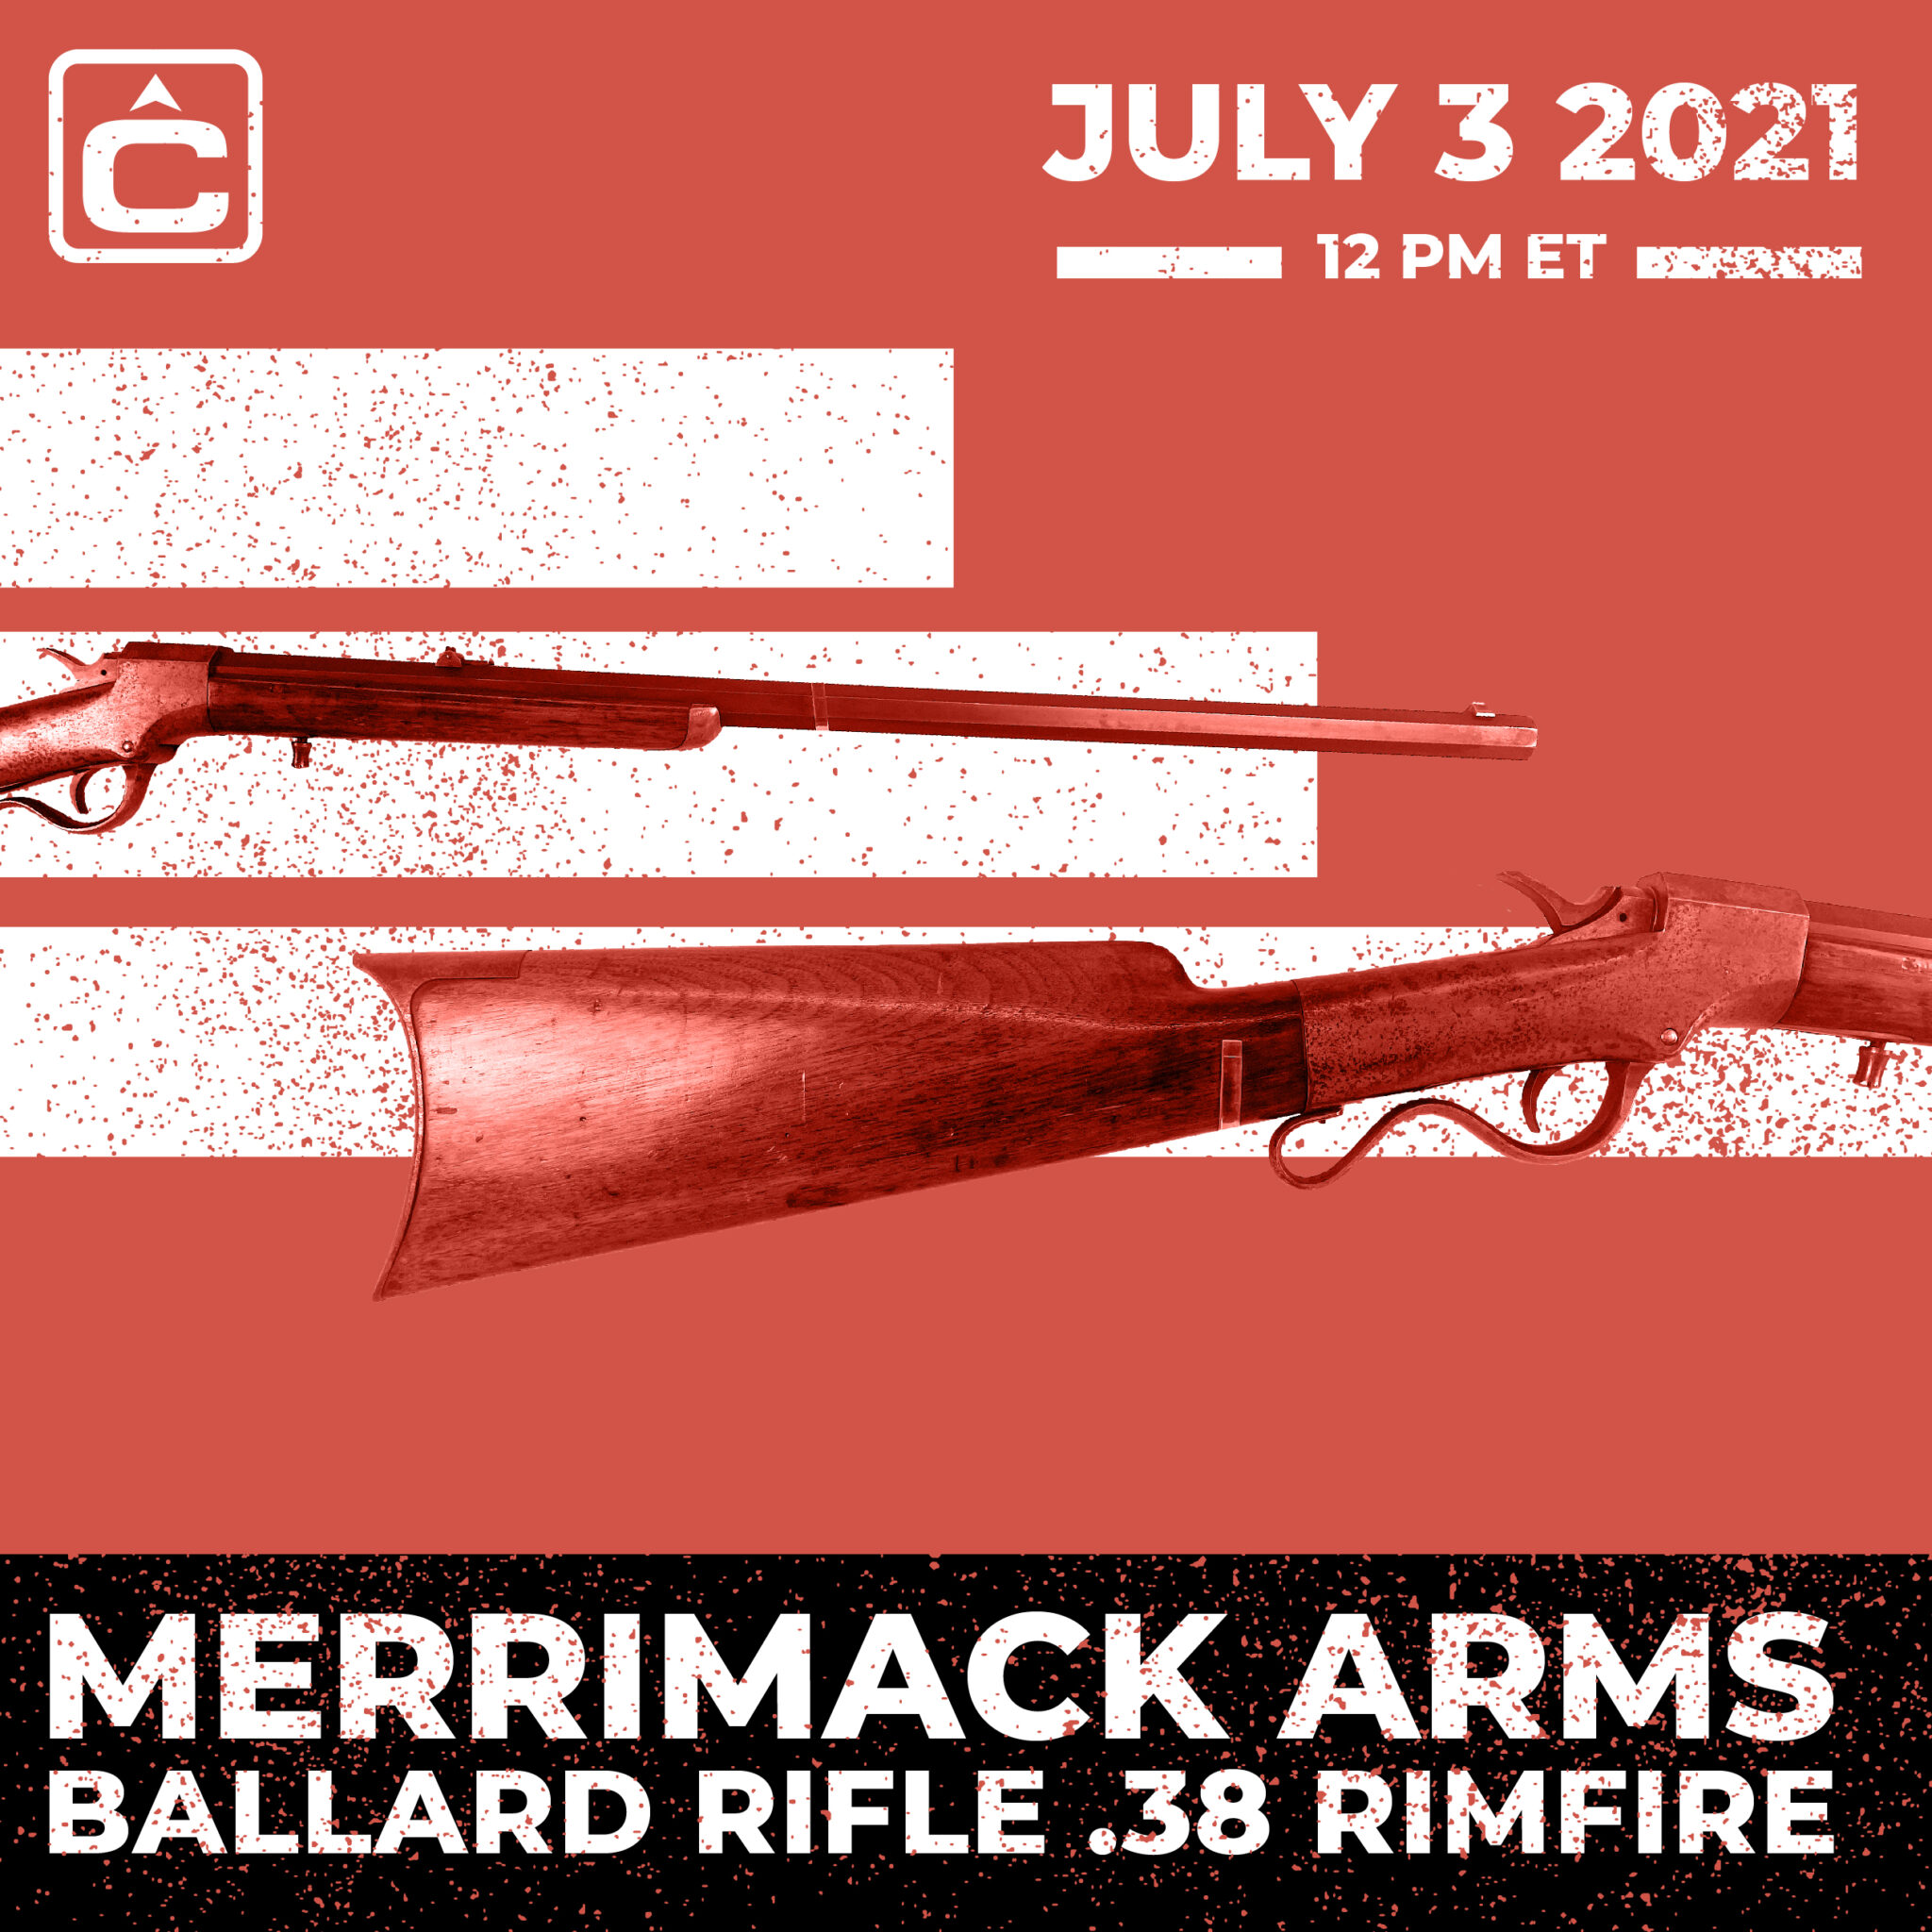 MERRIMACK ARMS BALLARD RIFLE .38 RIMFIRE